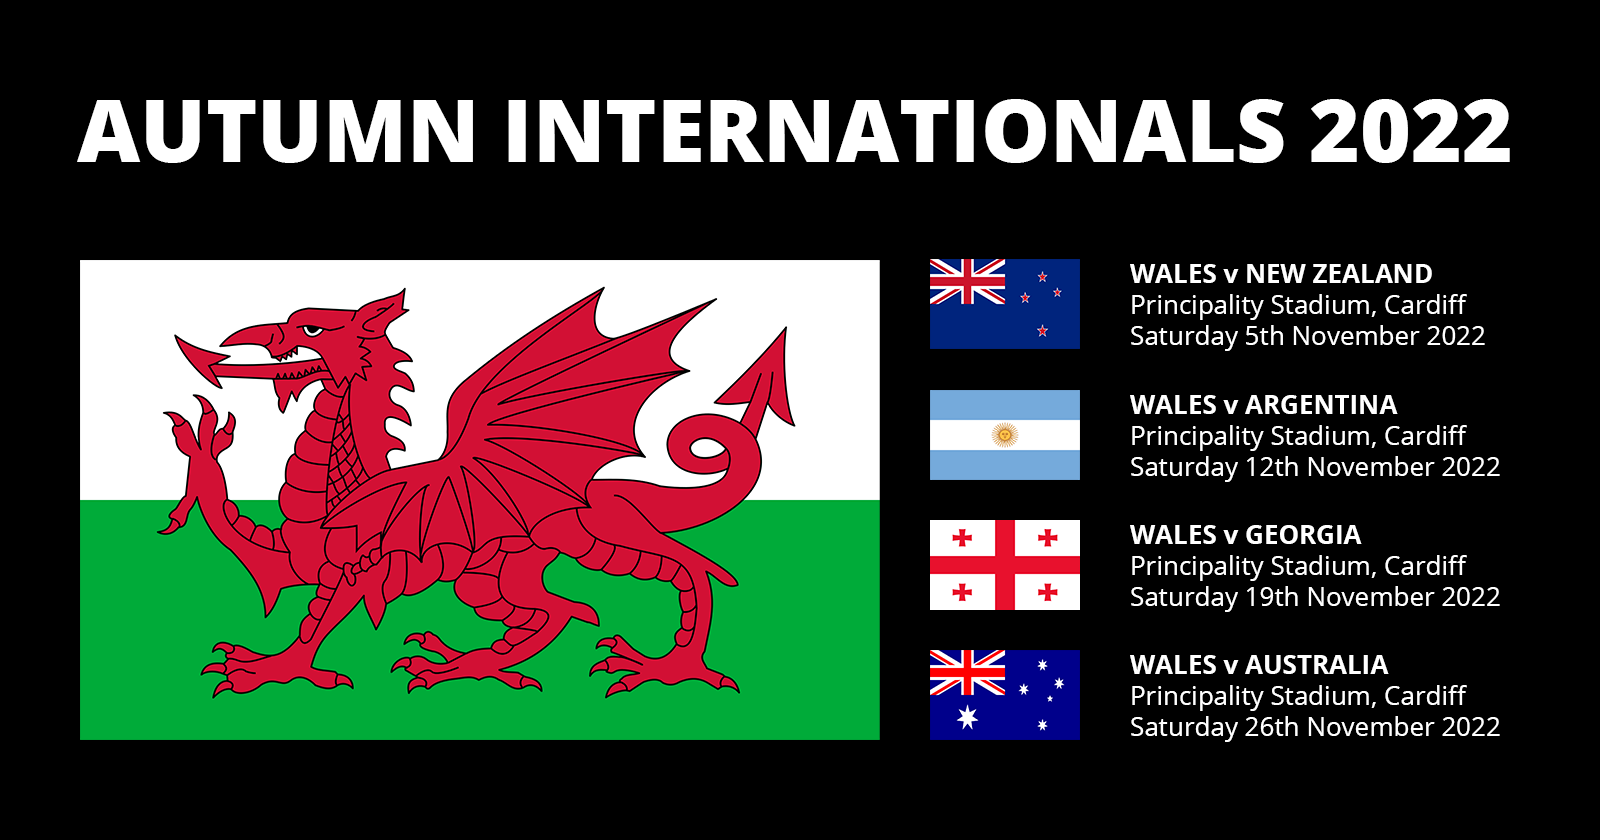 Wales Autumn Internationals 2022 Rugby Fixtures